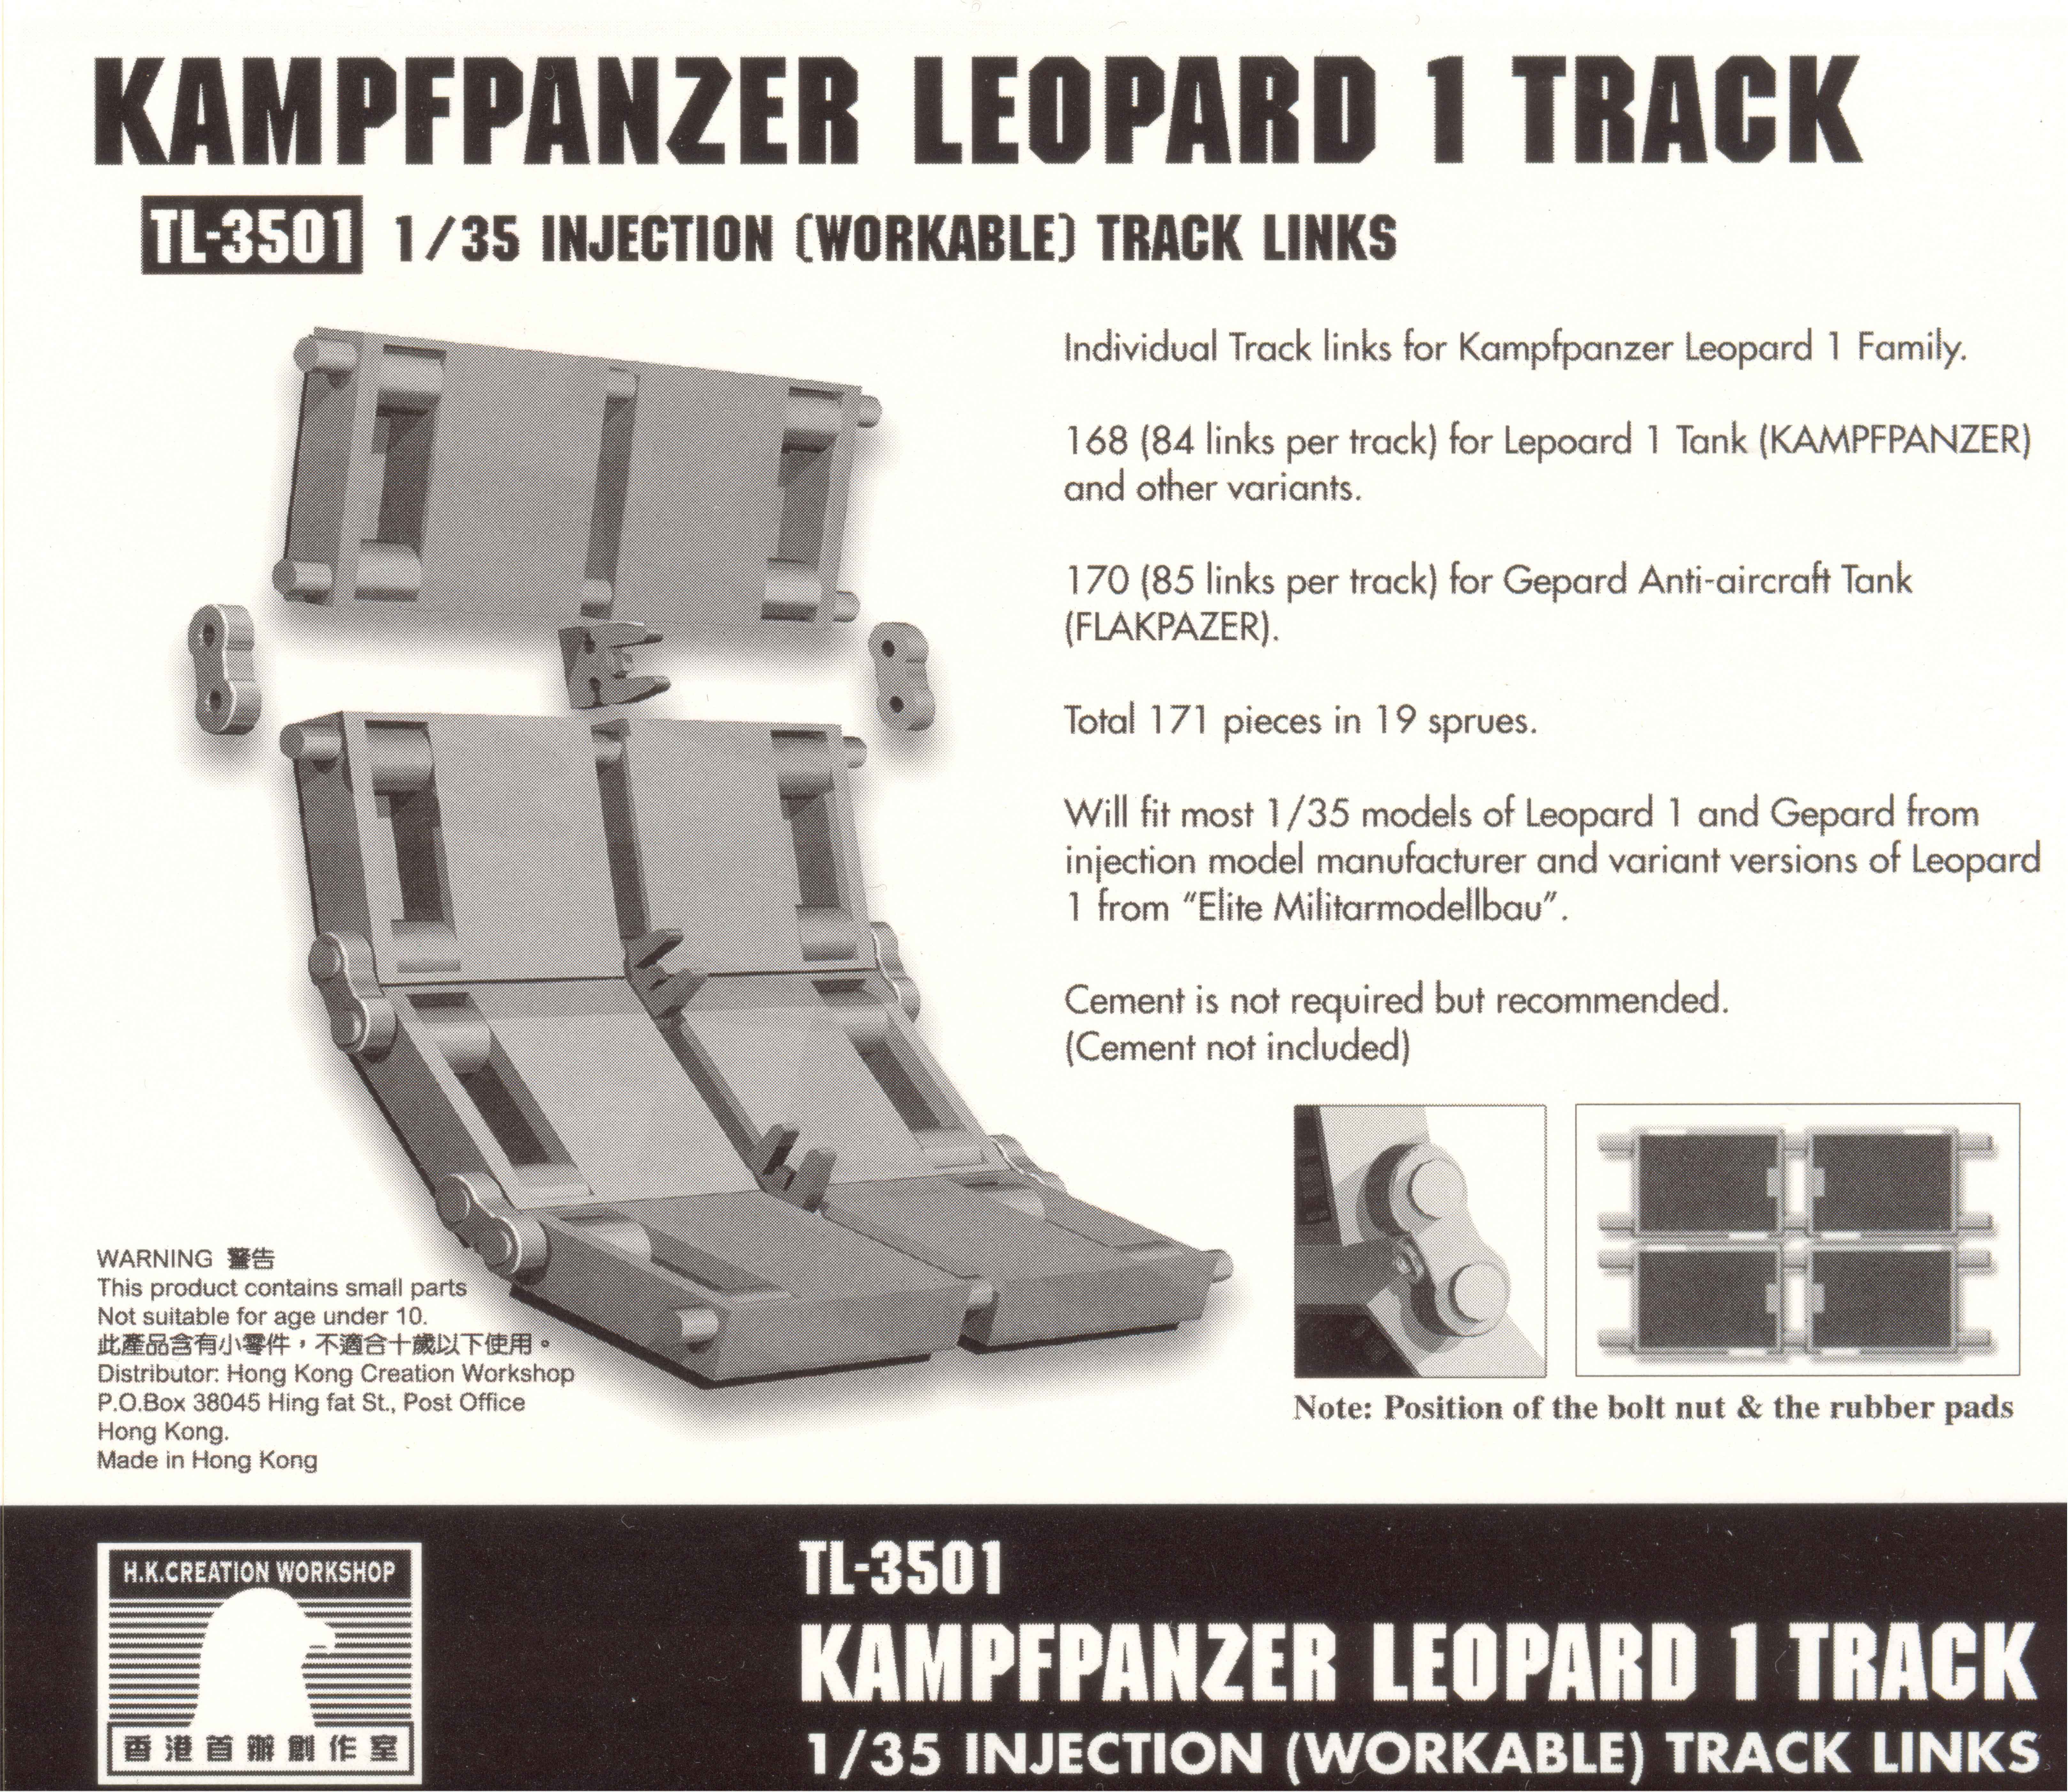 TL-3501 Kampfpanzer Leopard 1 Track